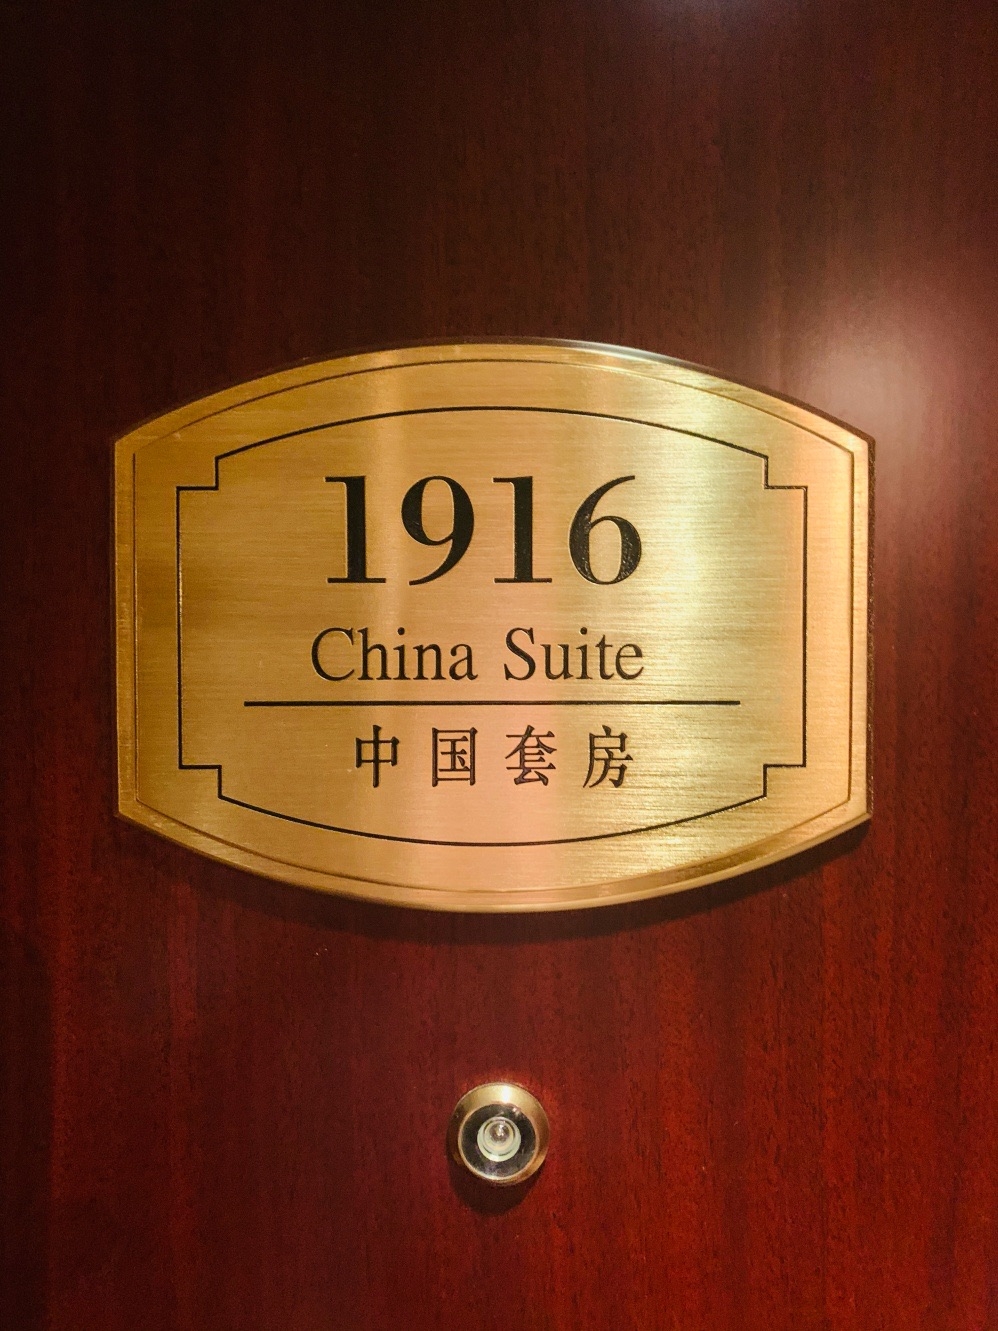 ST. Regis Beijing China Suite